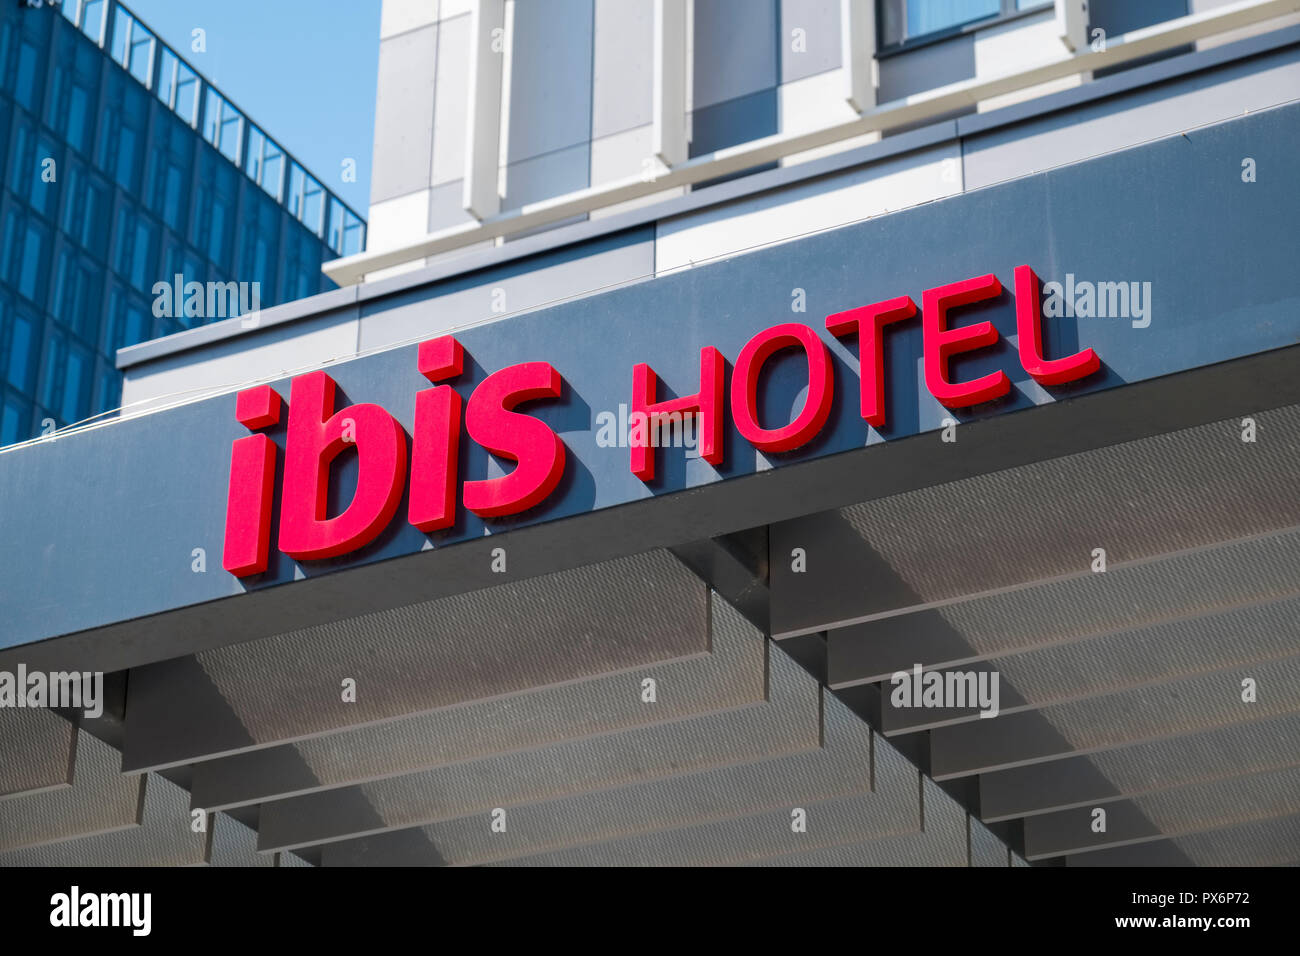 Ibis Hotel sign, Europe Stock Photo